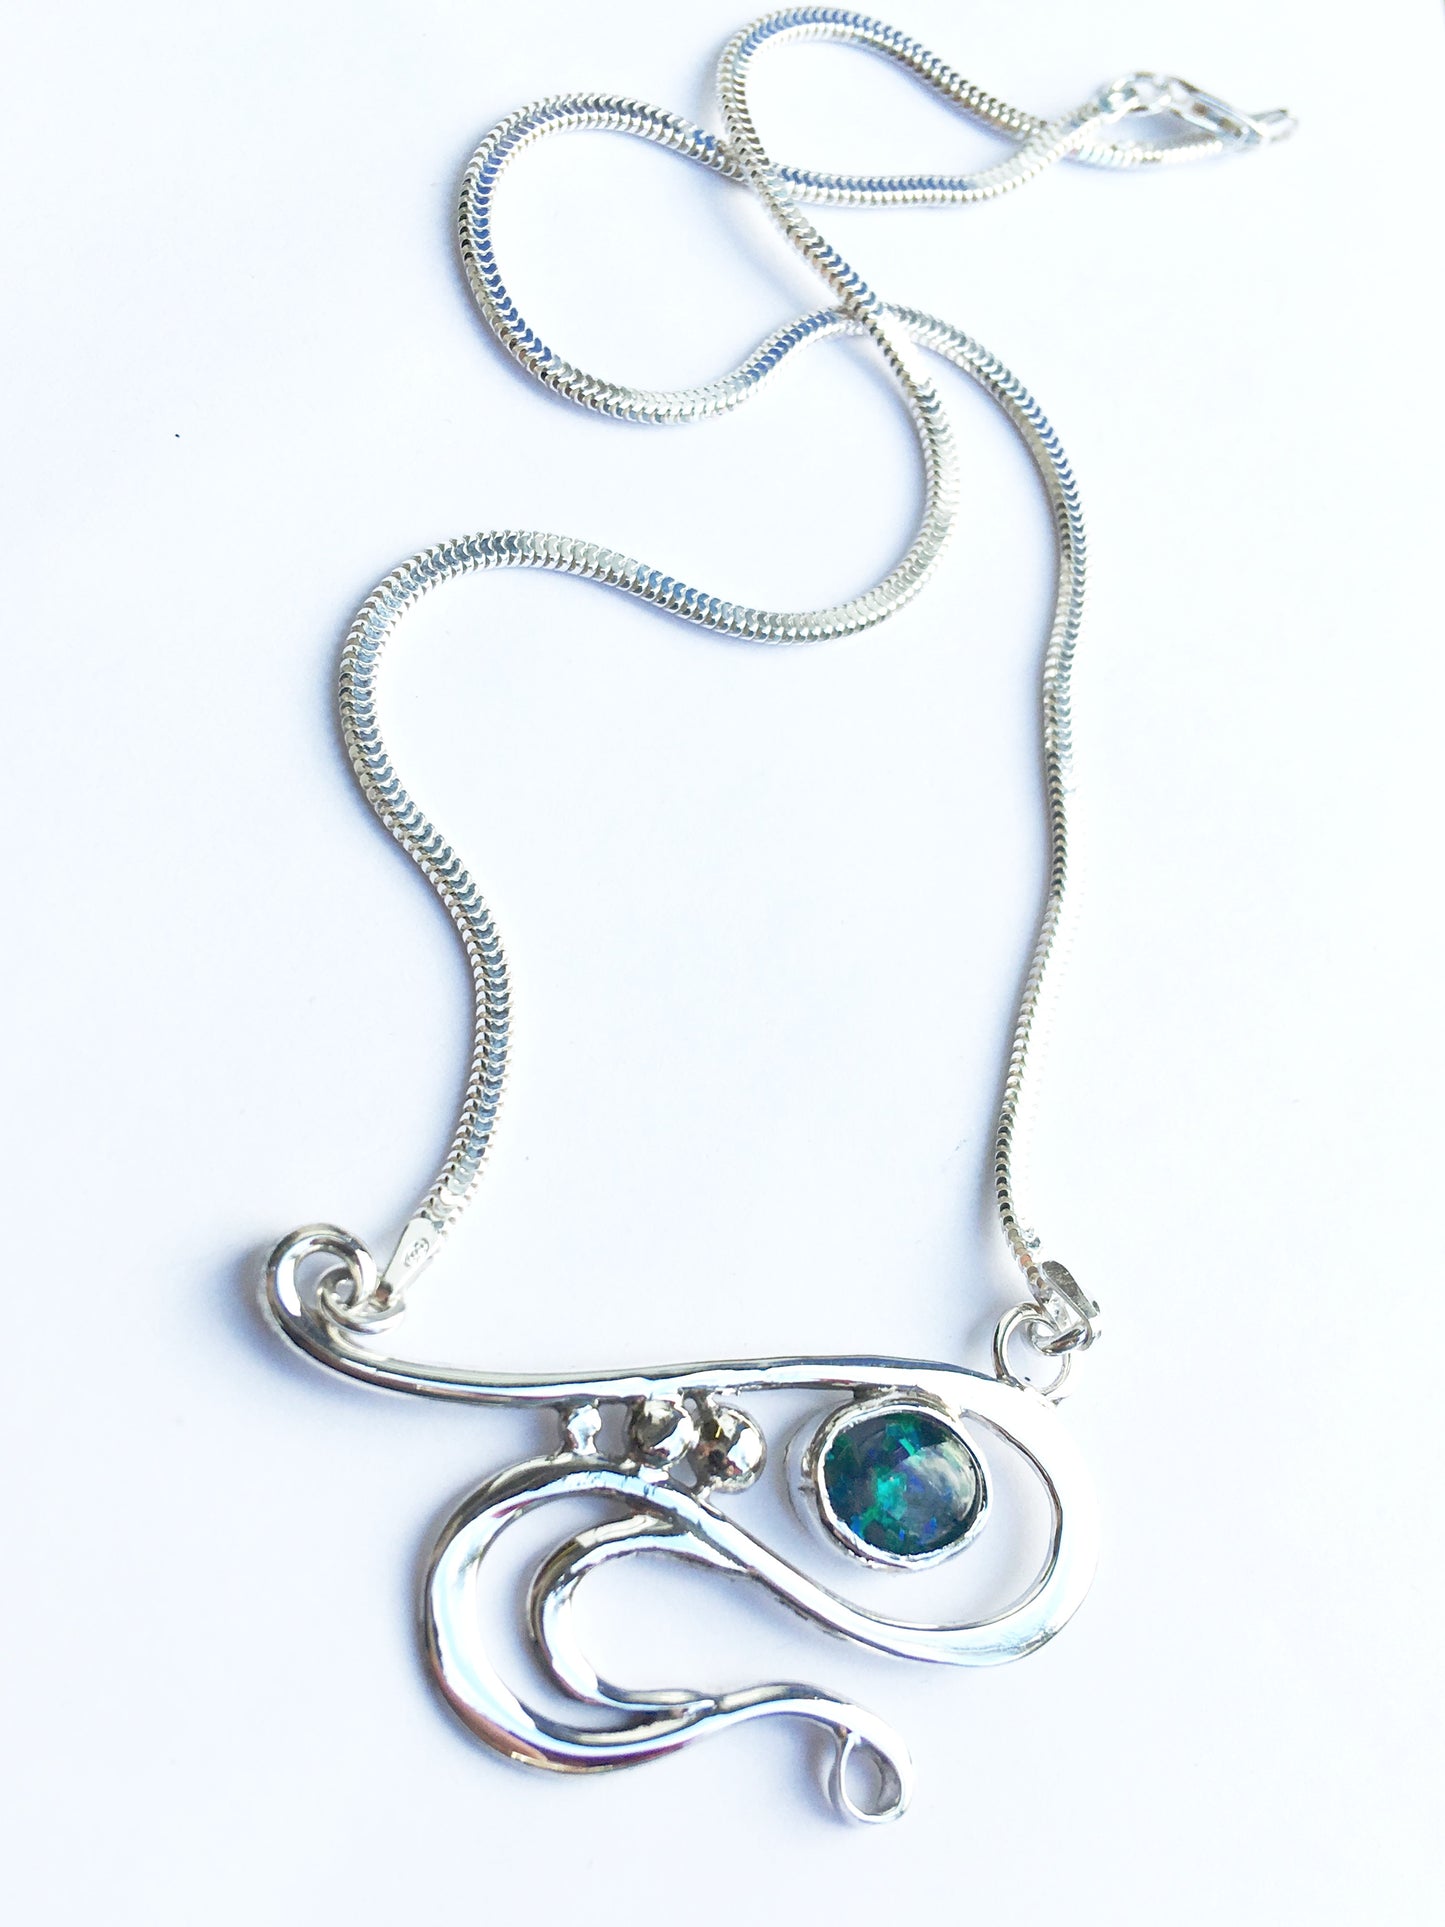 Wave opal necklace